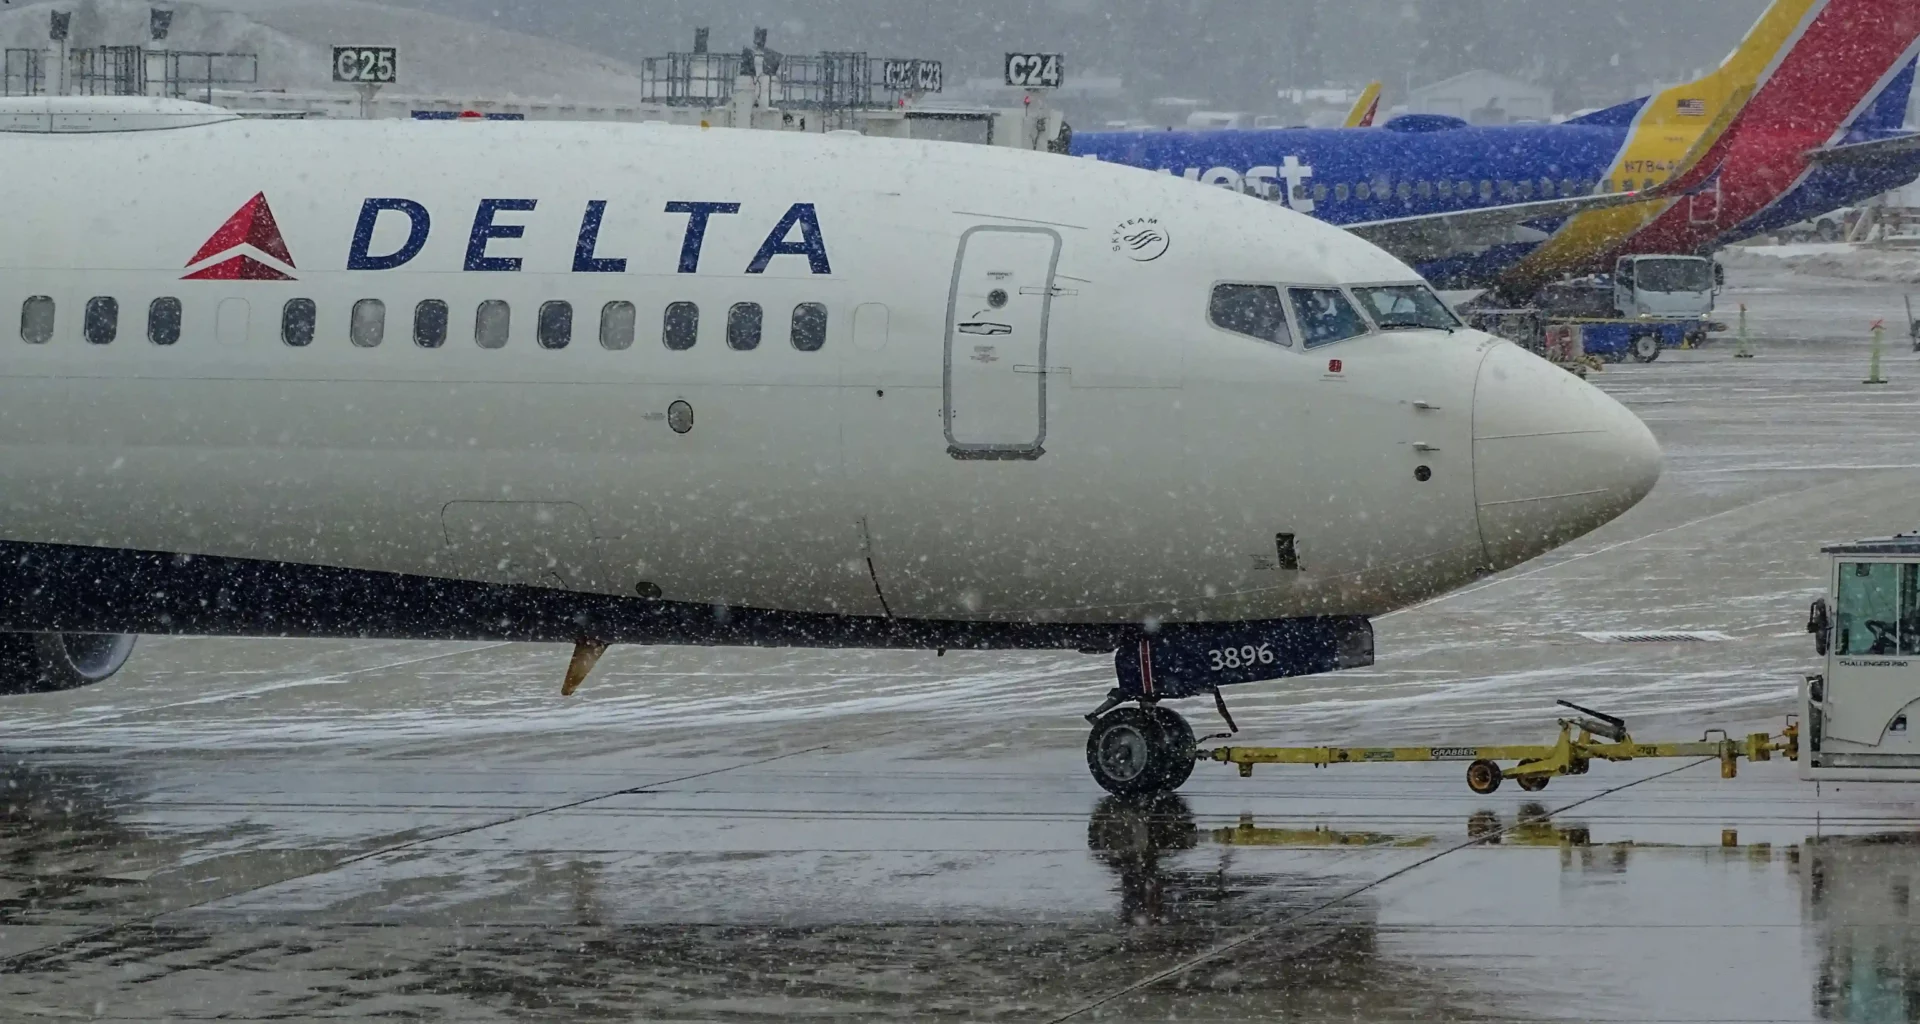 Delta plane on tarmac in snow